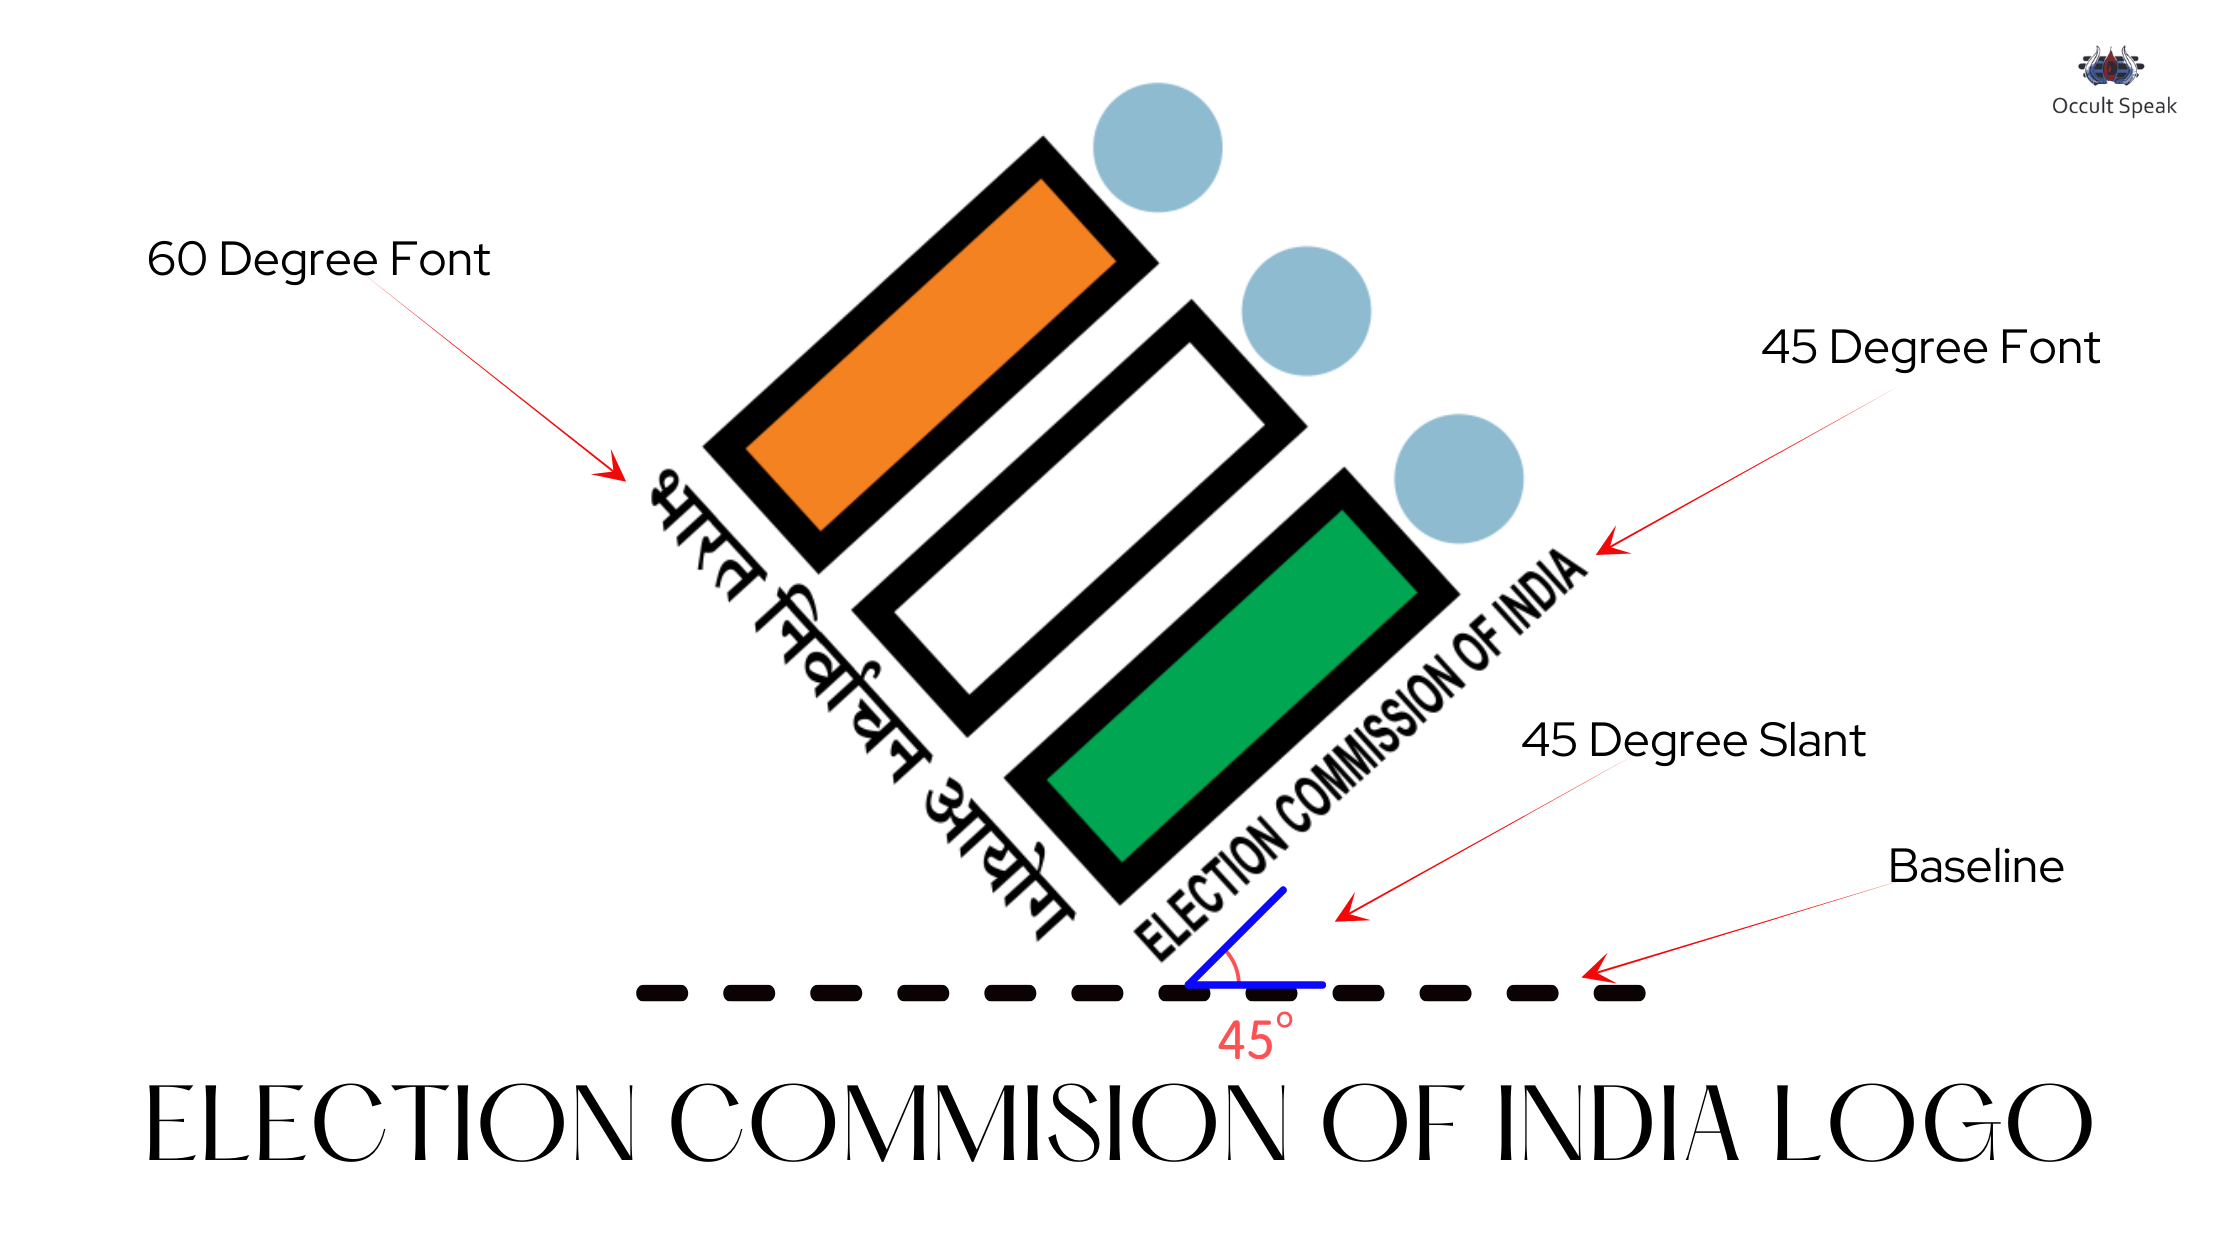 Election Commission of India Logo Analysis